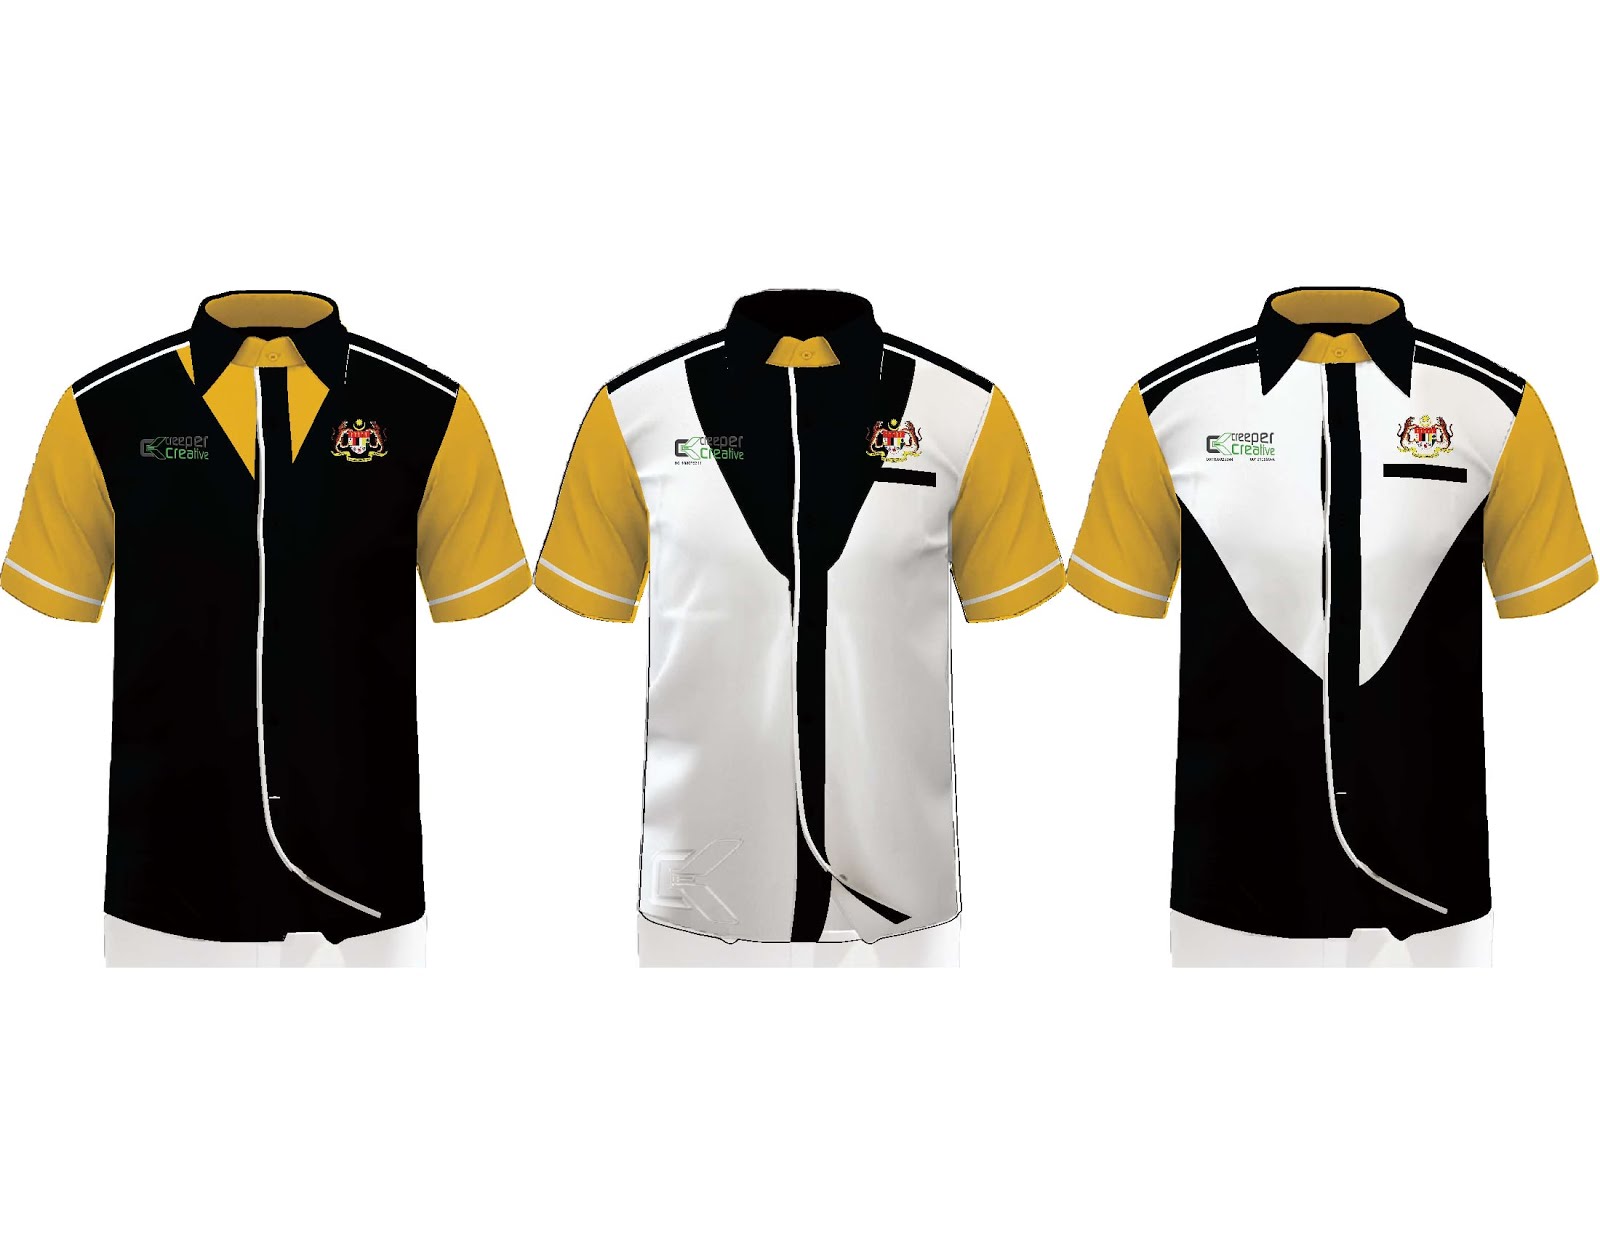 Baju korporat Custom made pelbagai design dan warna | Casual Striped